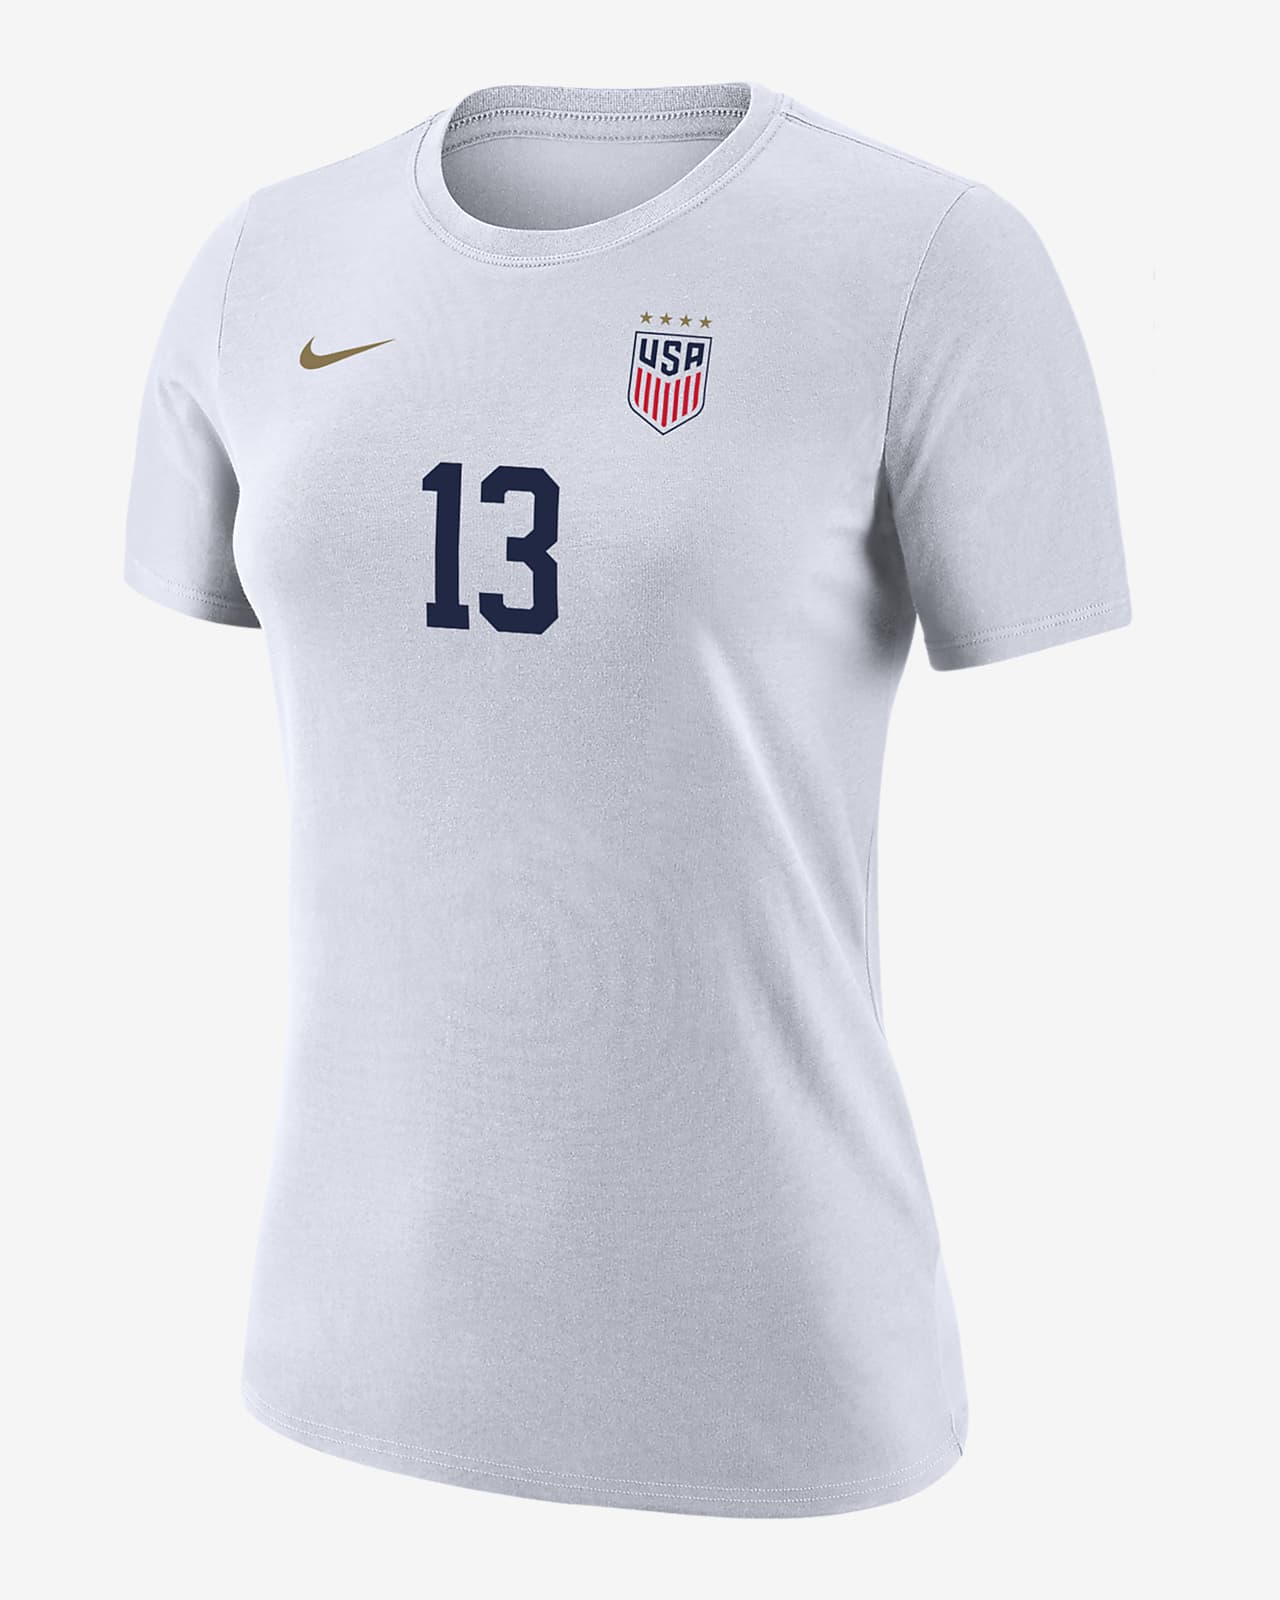 Alex Morgan USWNT Women's Nike Soccer T-Shirt